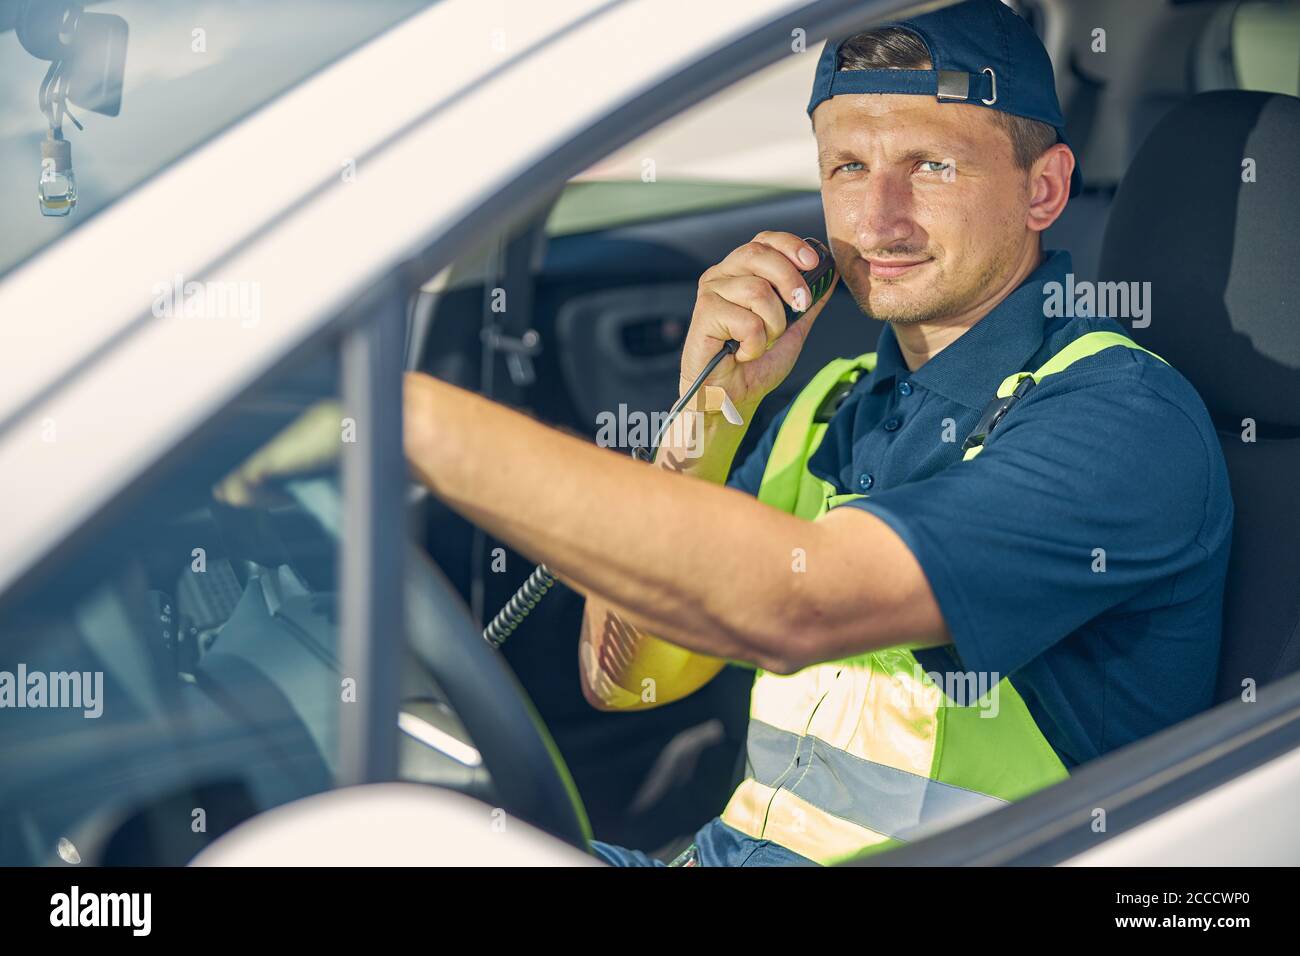 Vehicle operator keeping one hand on the steering wheel Stock Photo